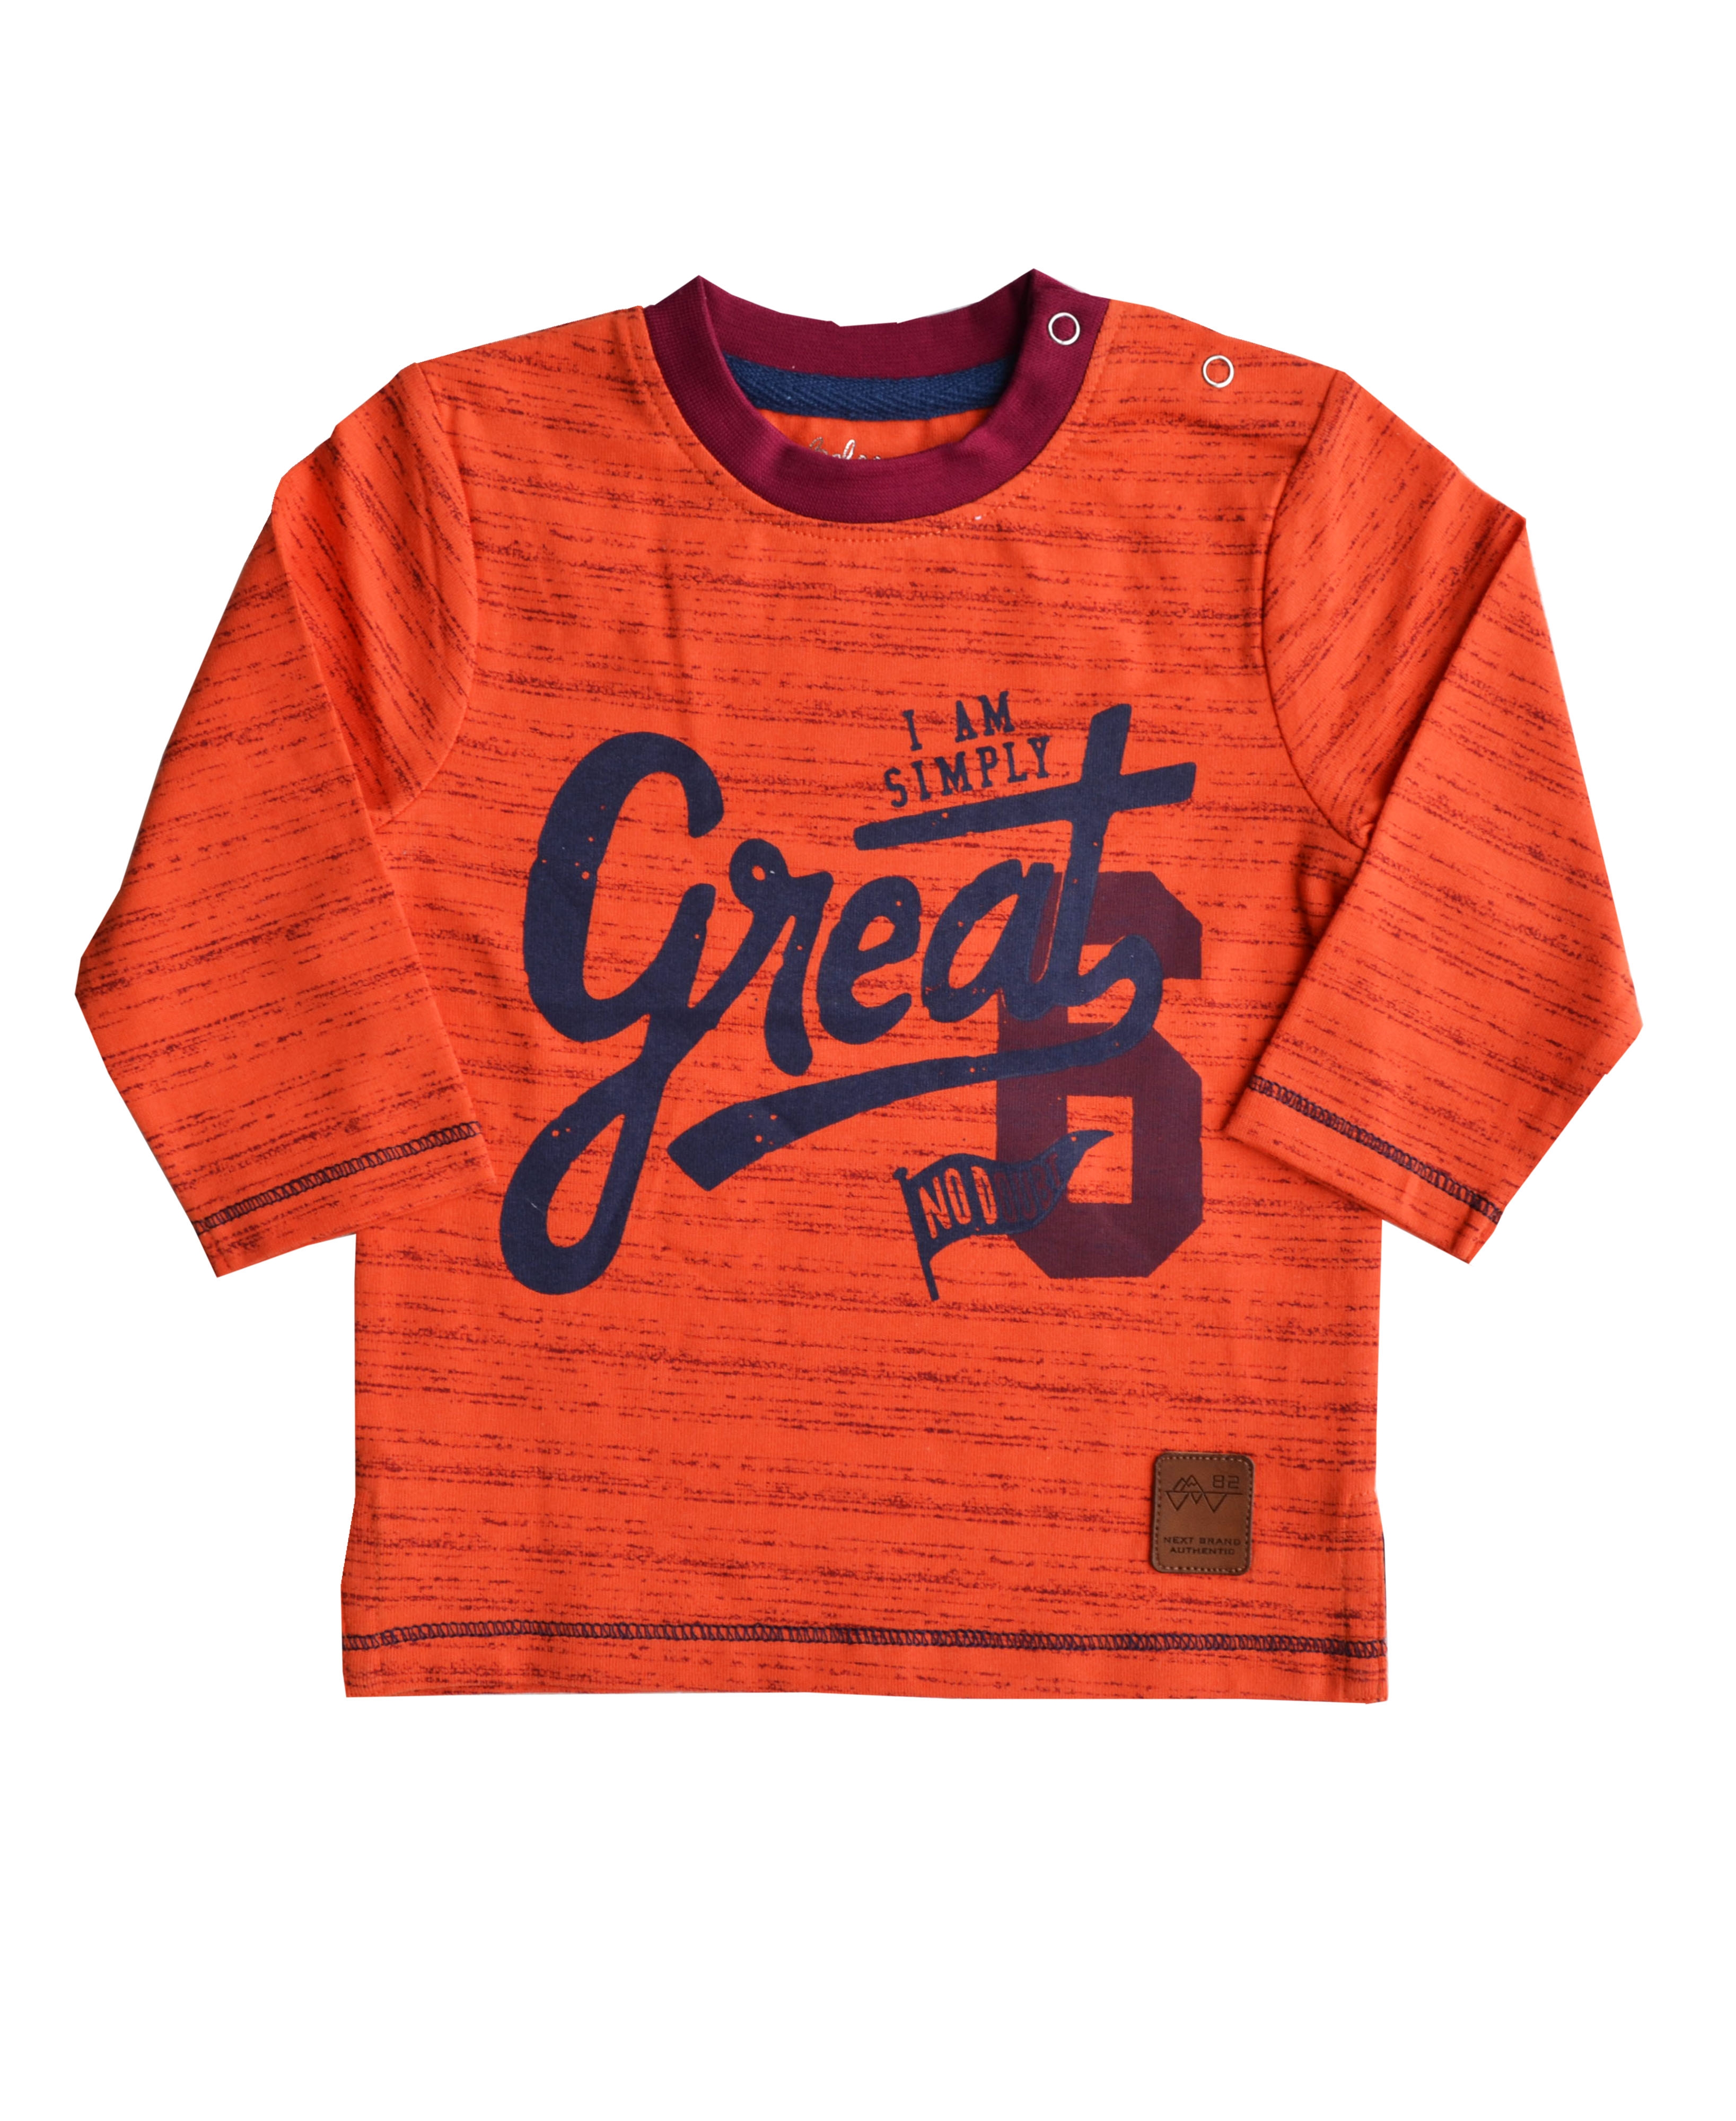 GREAT Print on Orange Long Sleeves T-Shirt (100% Cotton Single Jersey)